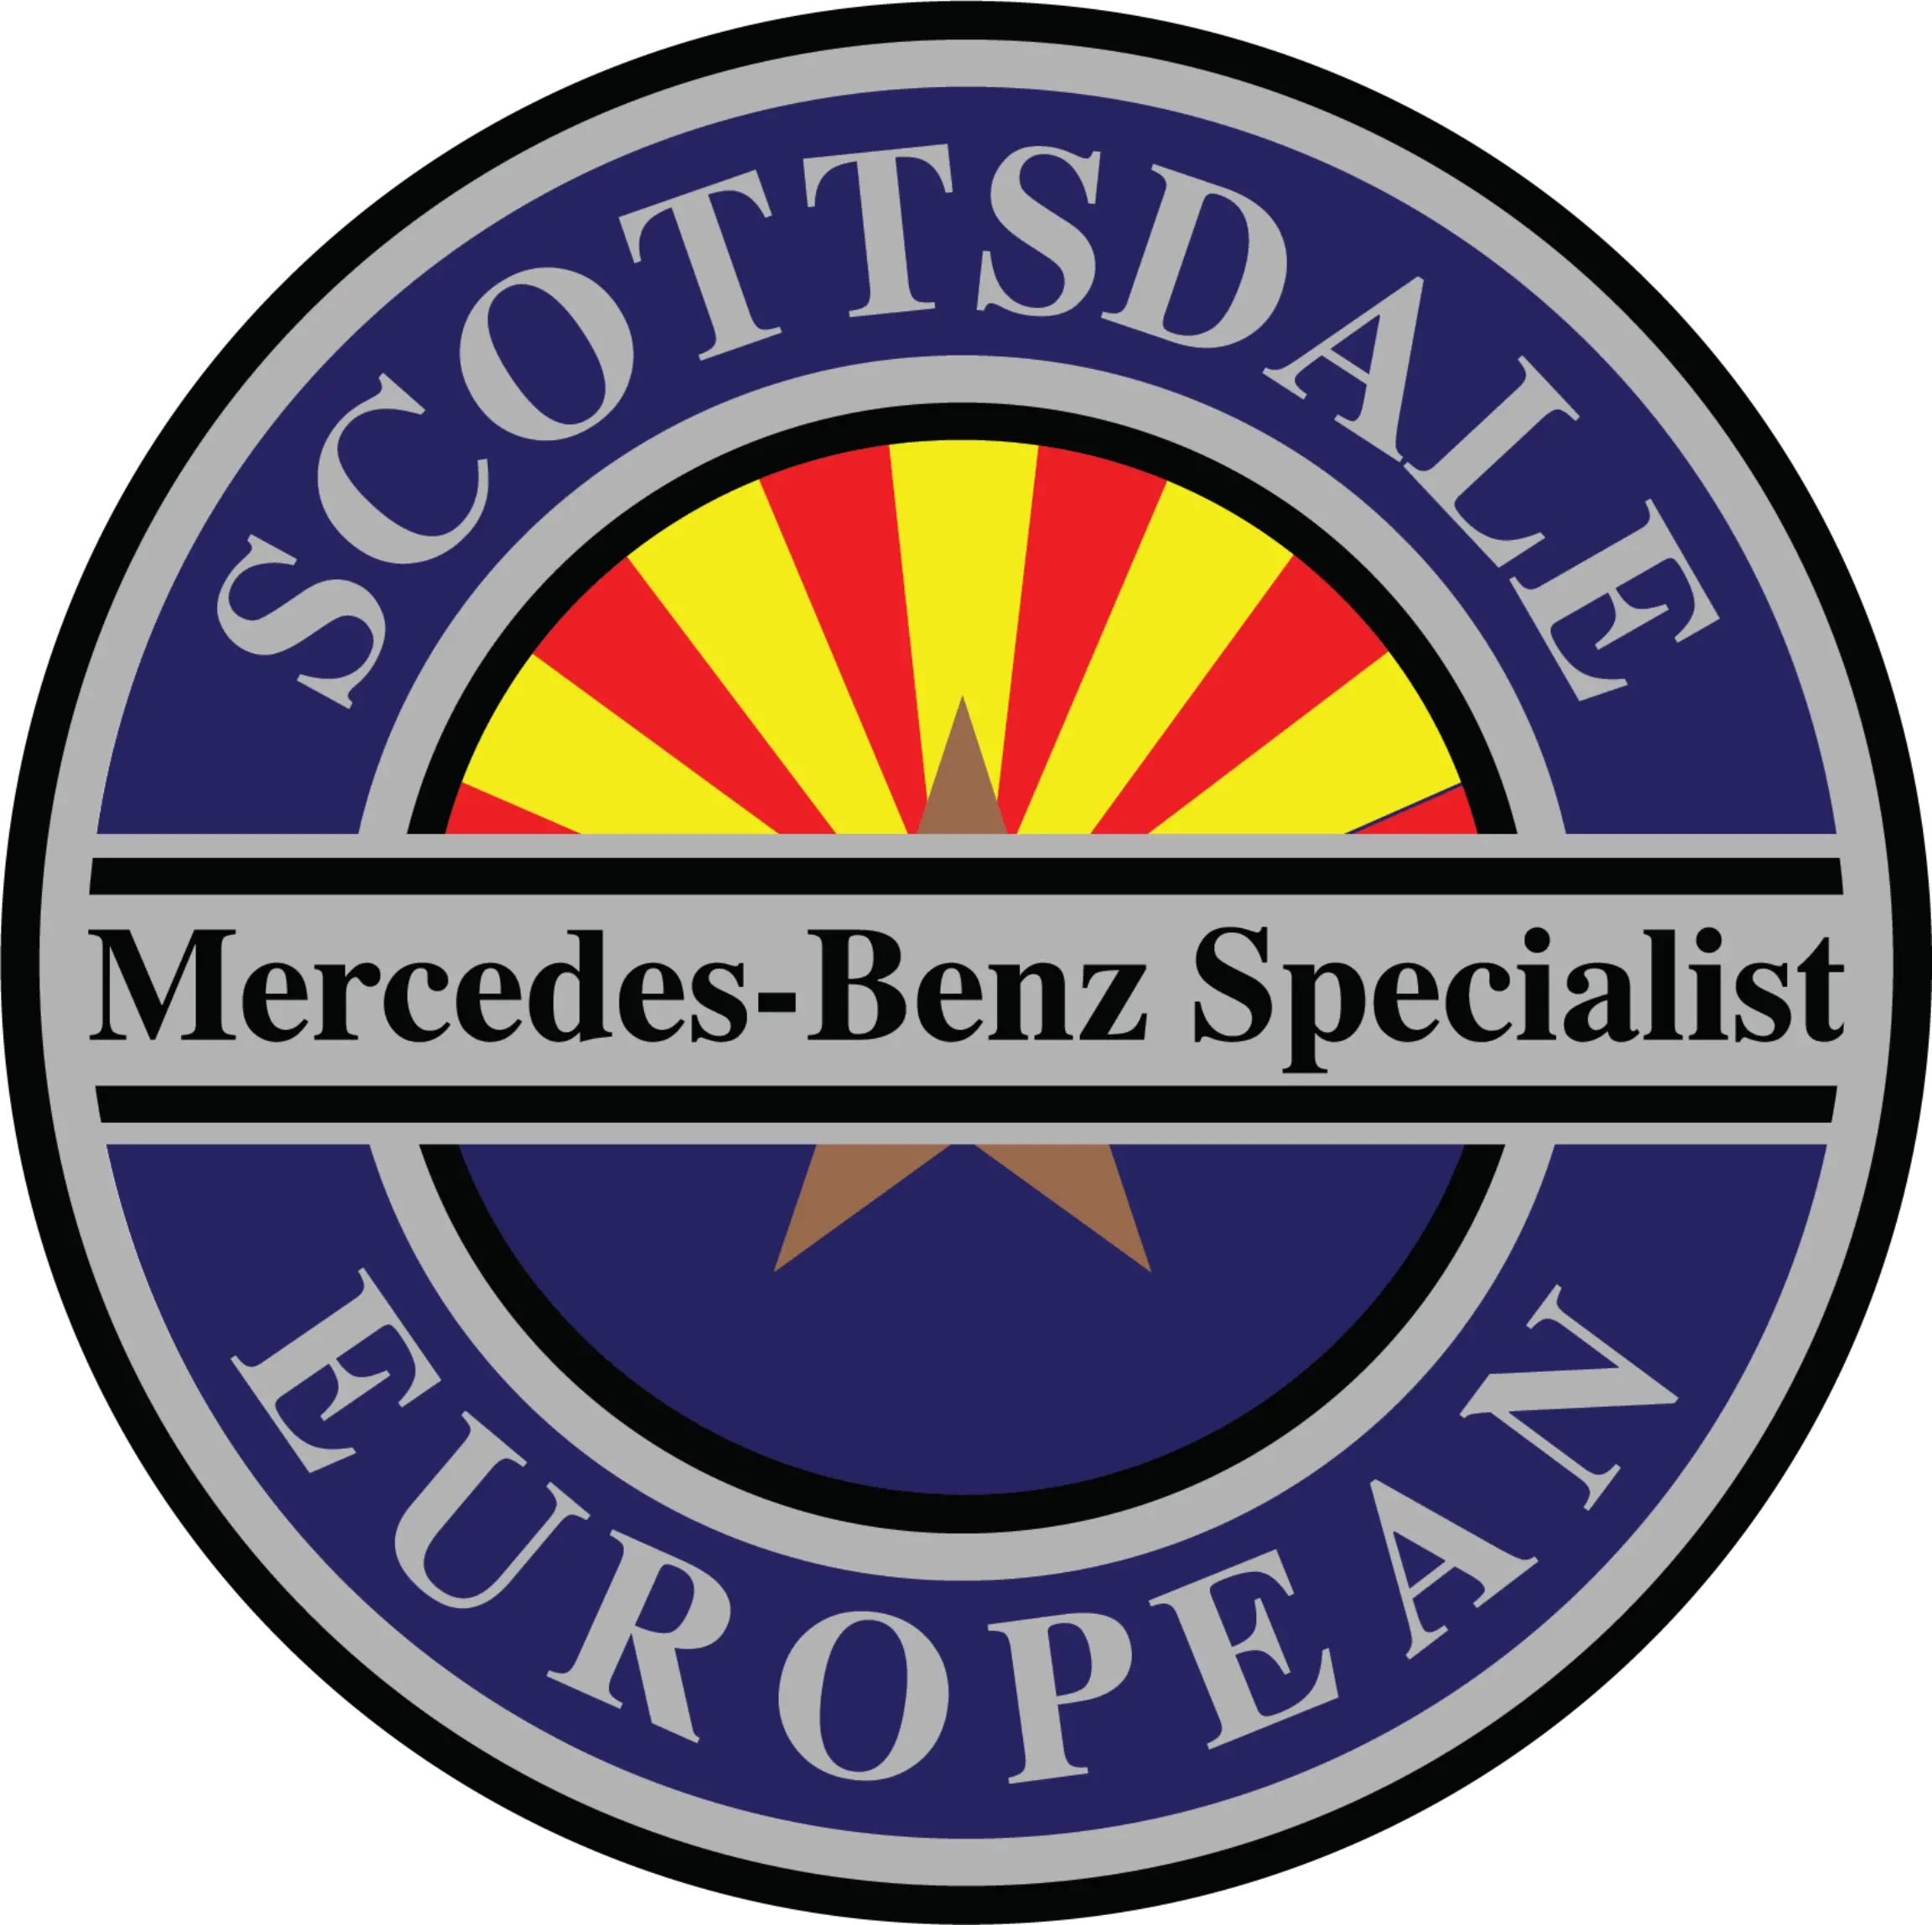 Scottsdale European Service